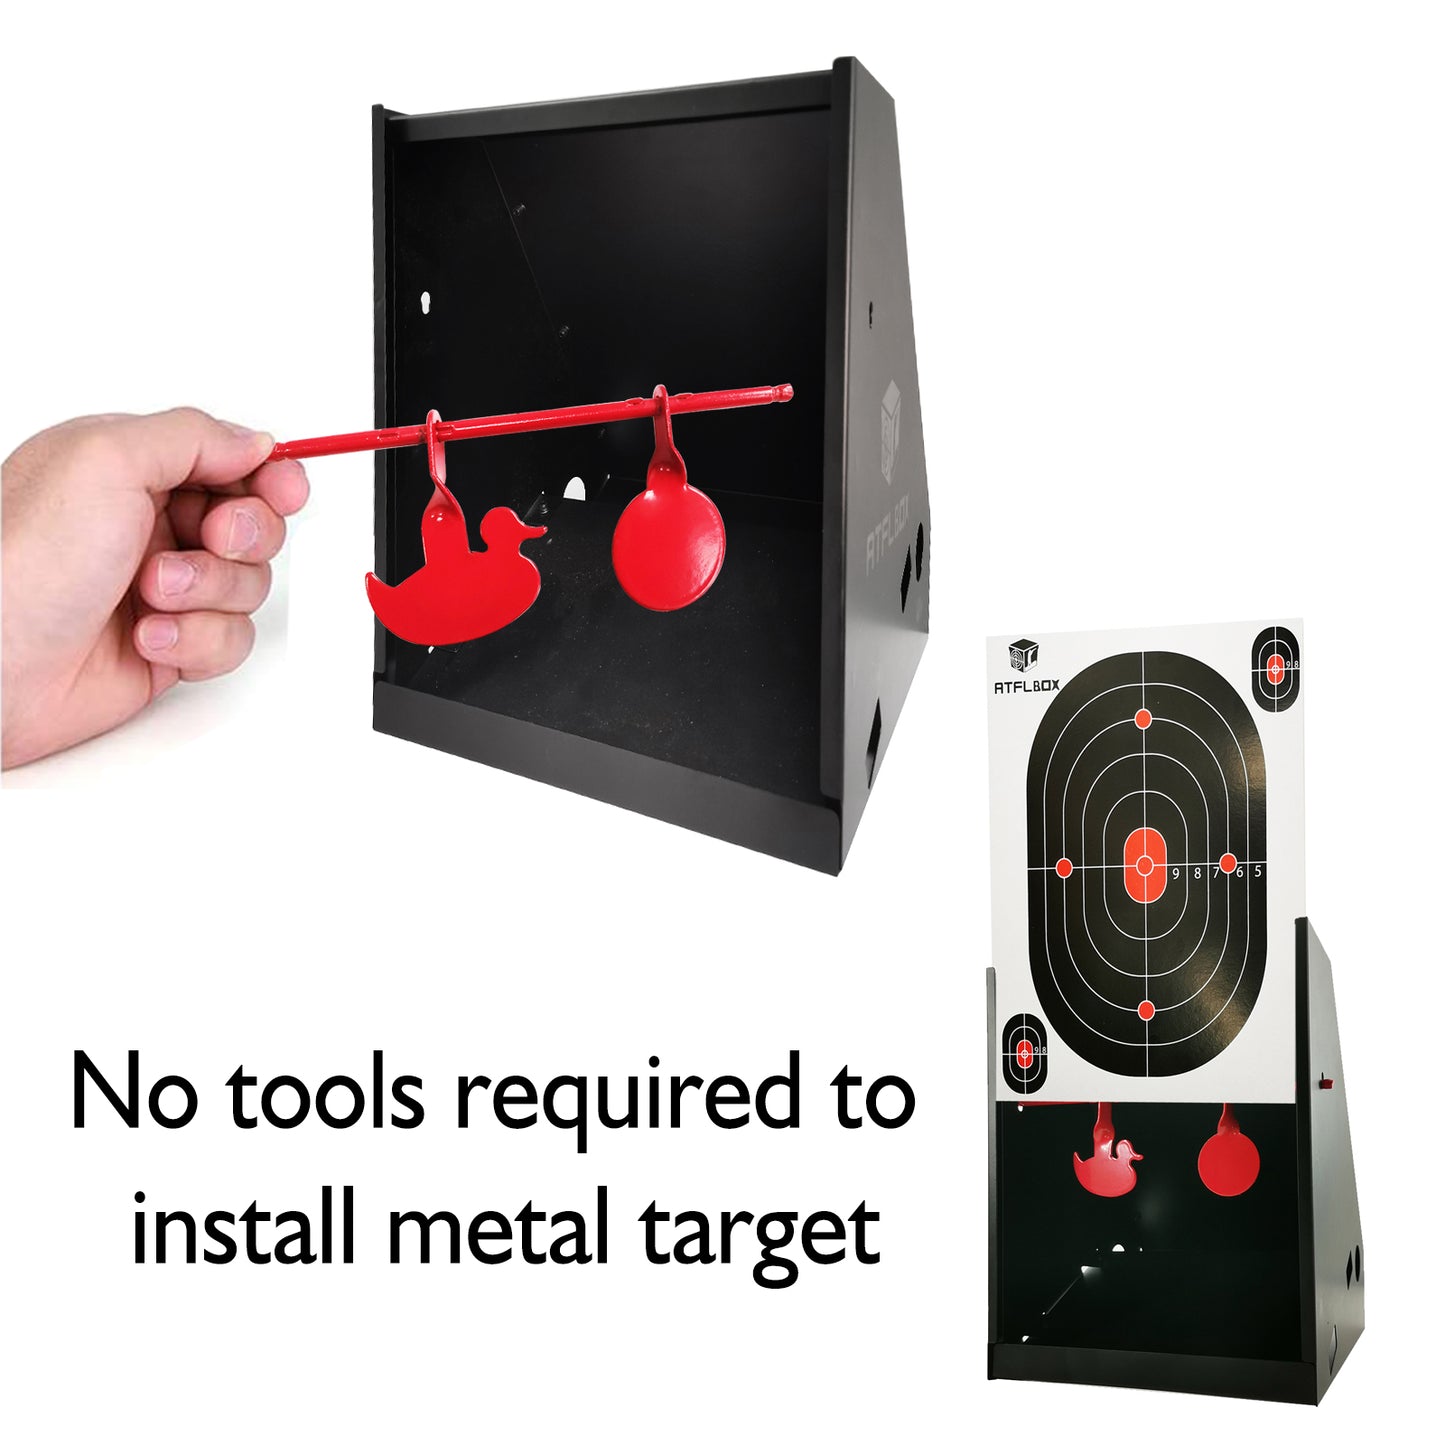 Atflbox 7 x 9 Inch BB Gun Target Trap with 10pcs Paper Target and Spinning Shooting Targets for Airsoft,BB Gun